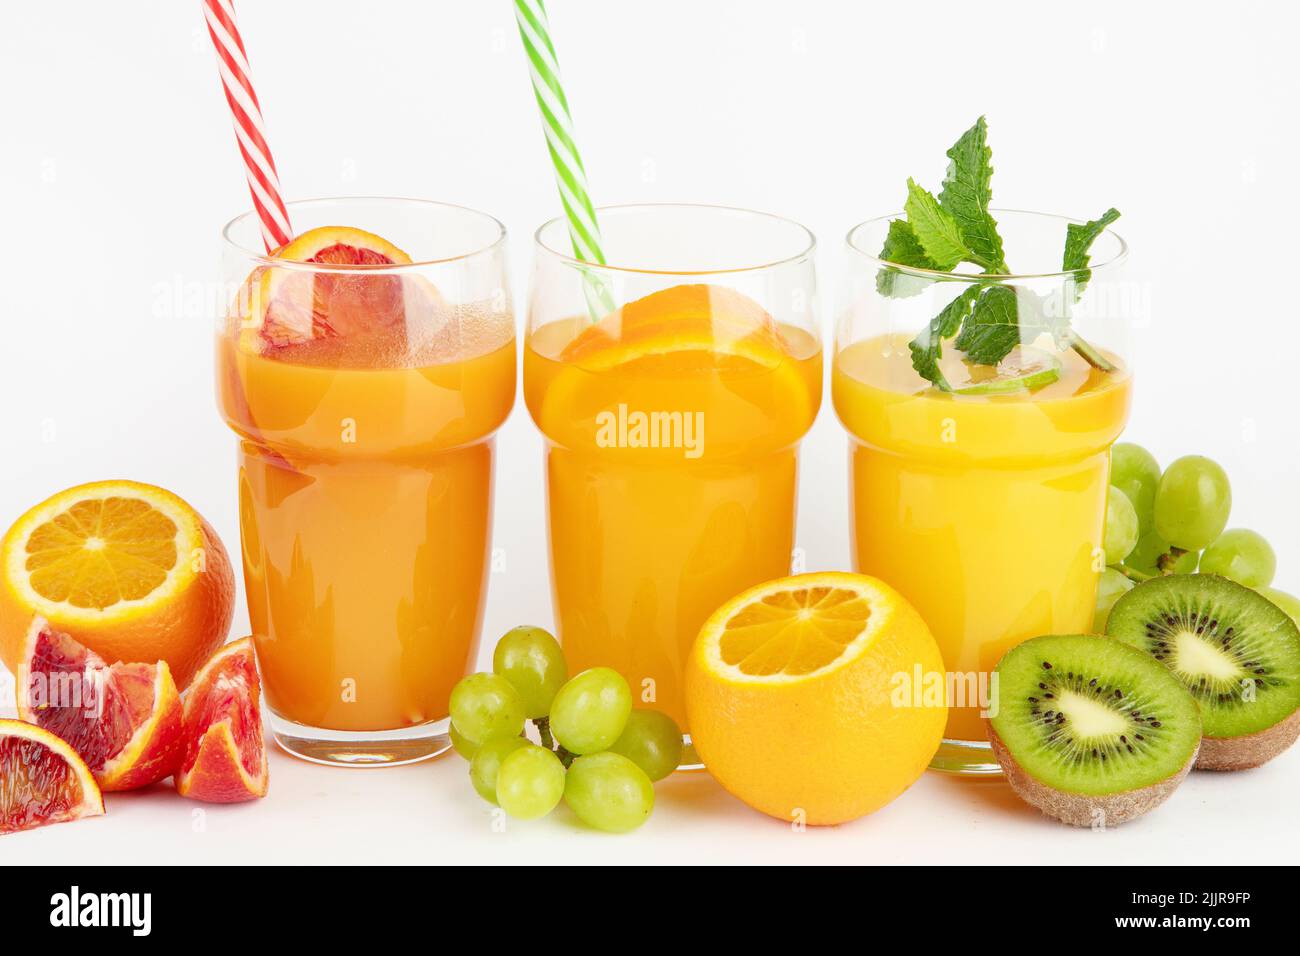 Fruit juices assortment on light background. Freshly made drinks. Stock Photo